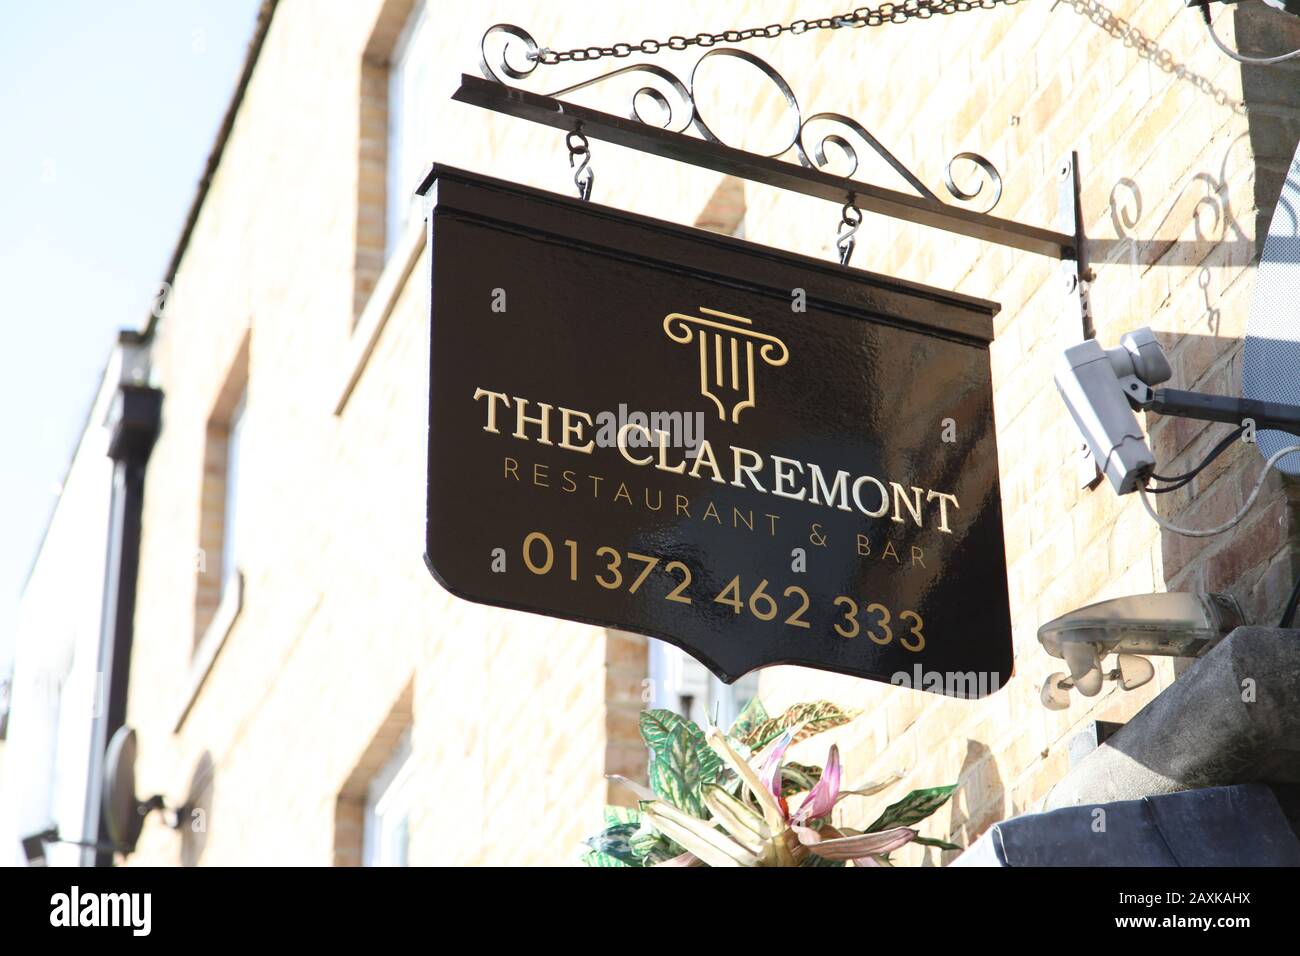 The Claremont Restaurant and Bar, Esher, Surrey, UK, February 2020 Stock Photo